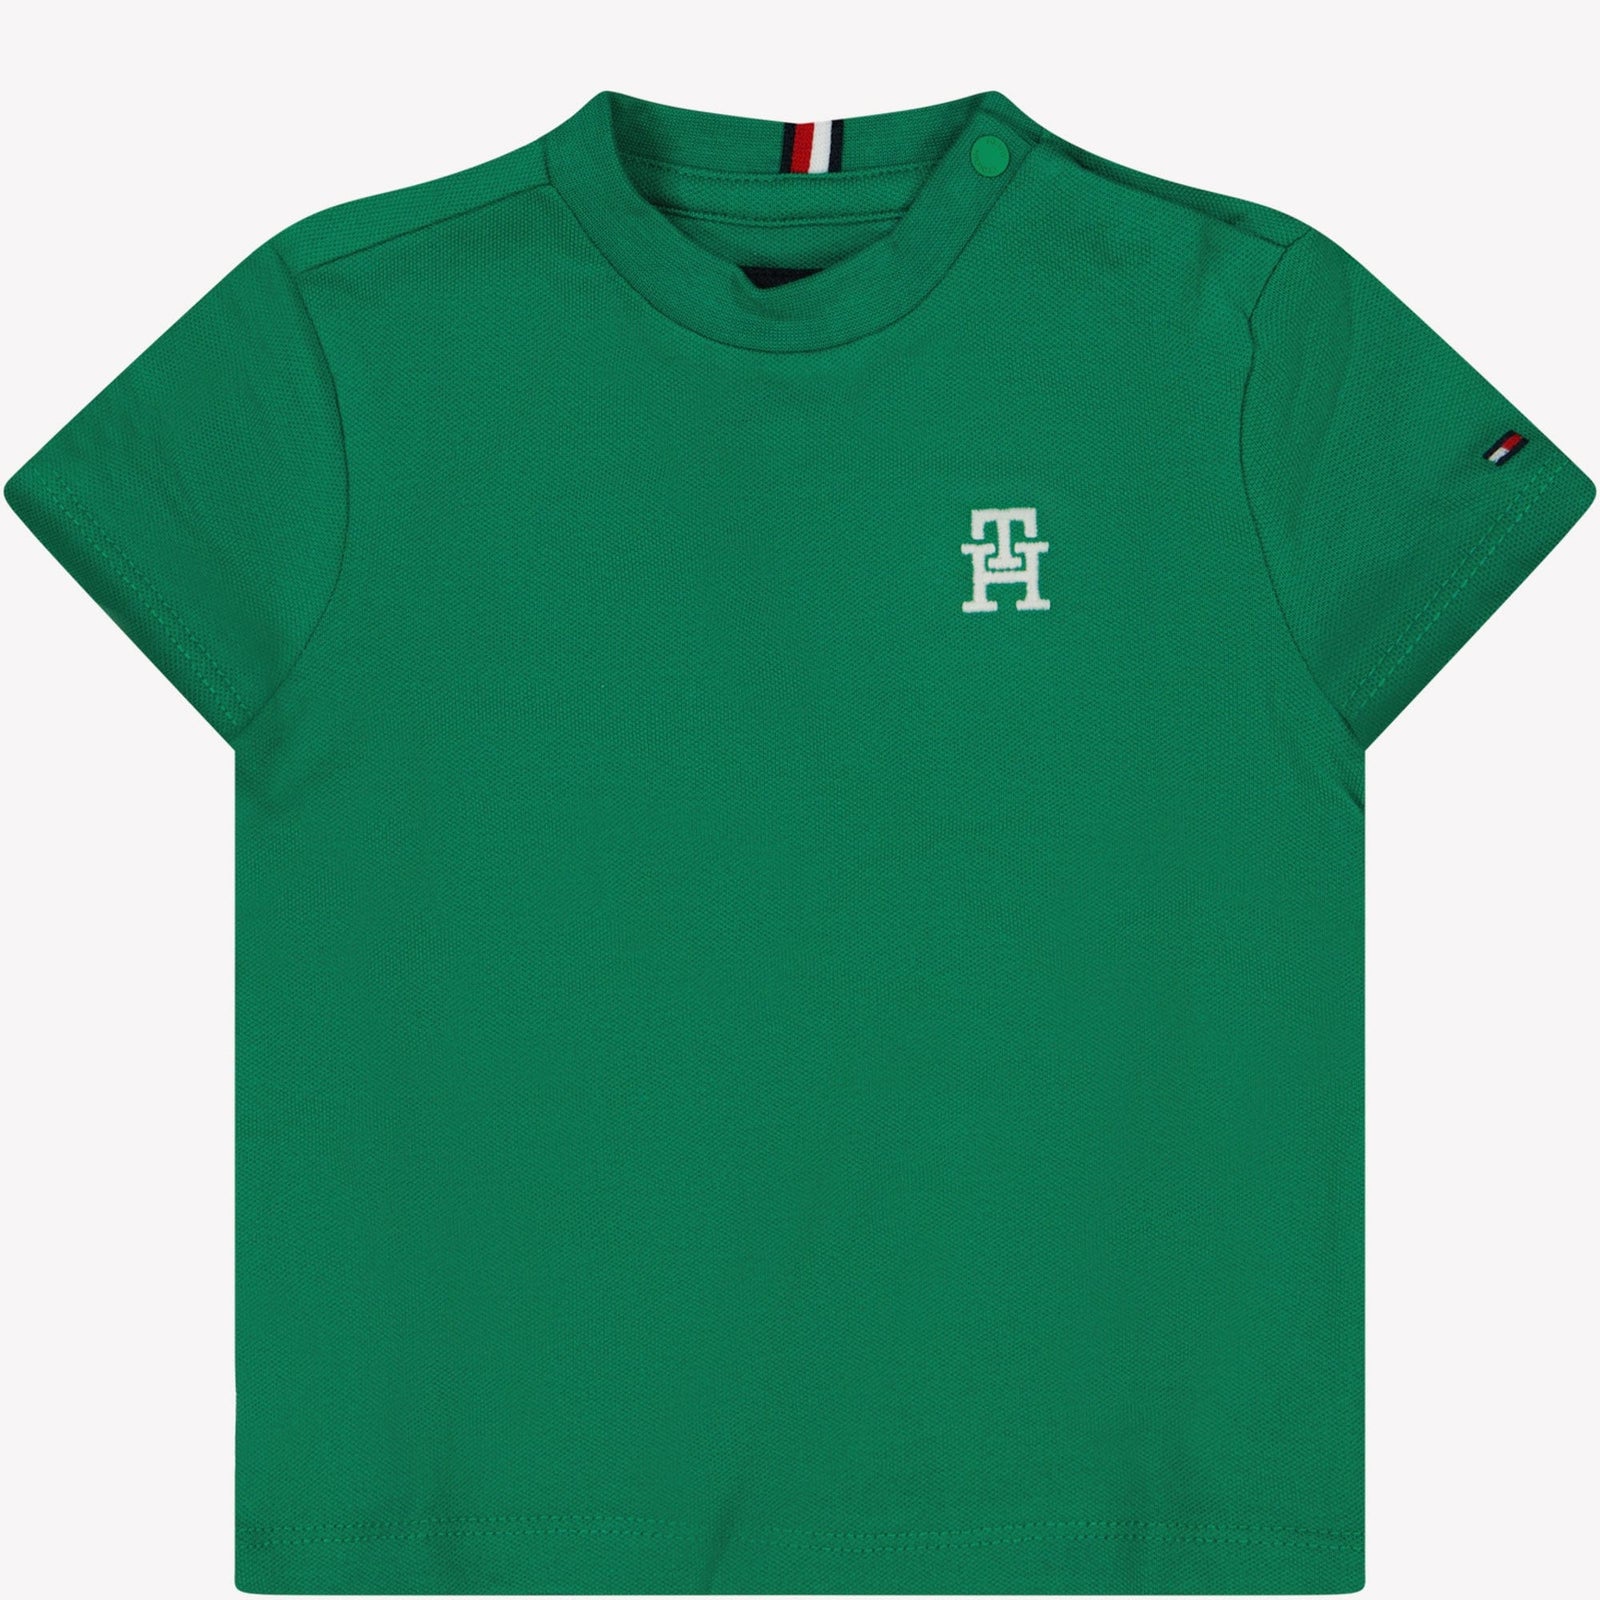 Tommy Hilfiger Baby Jongens T-shirt Groen 74